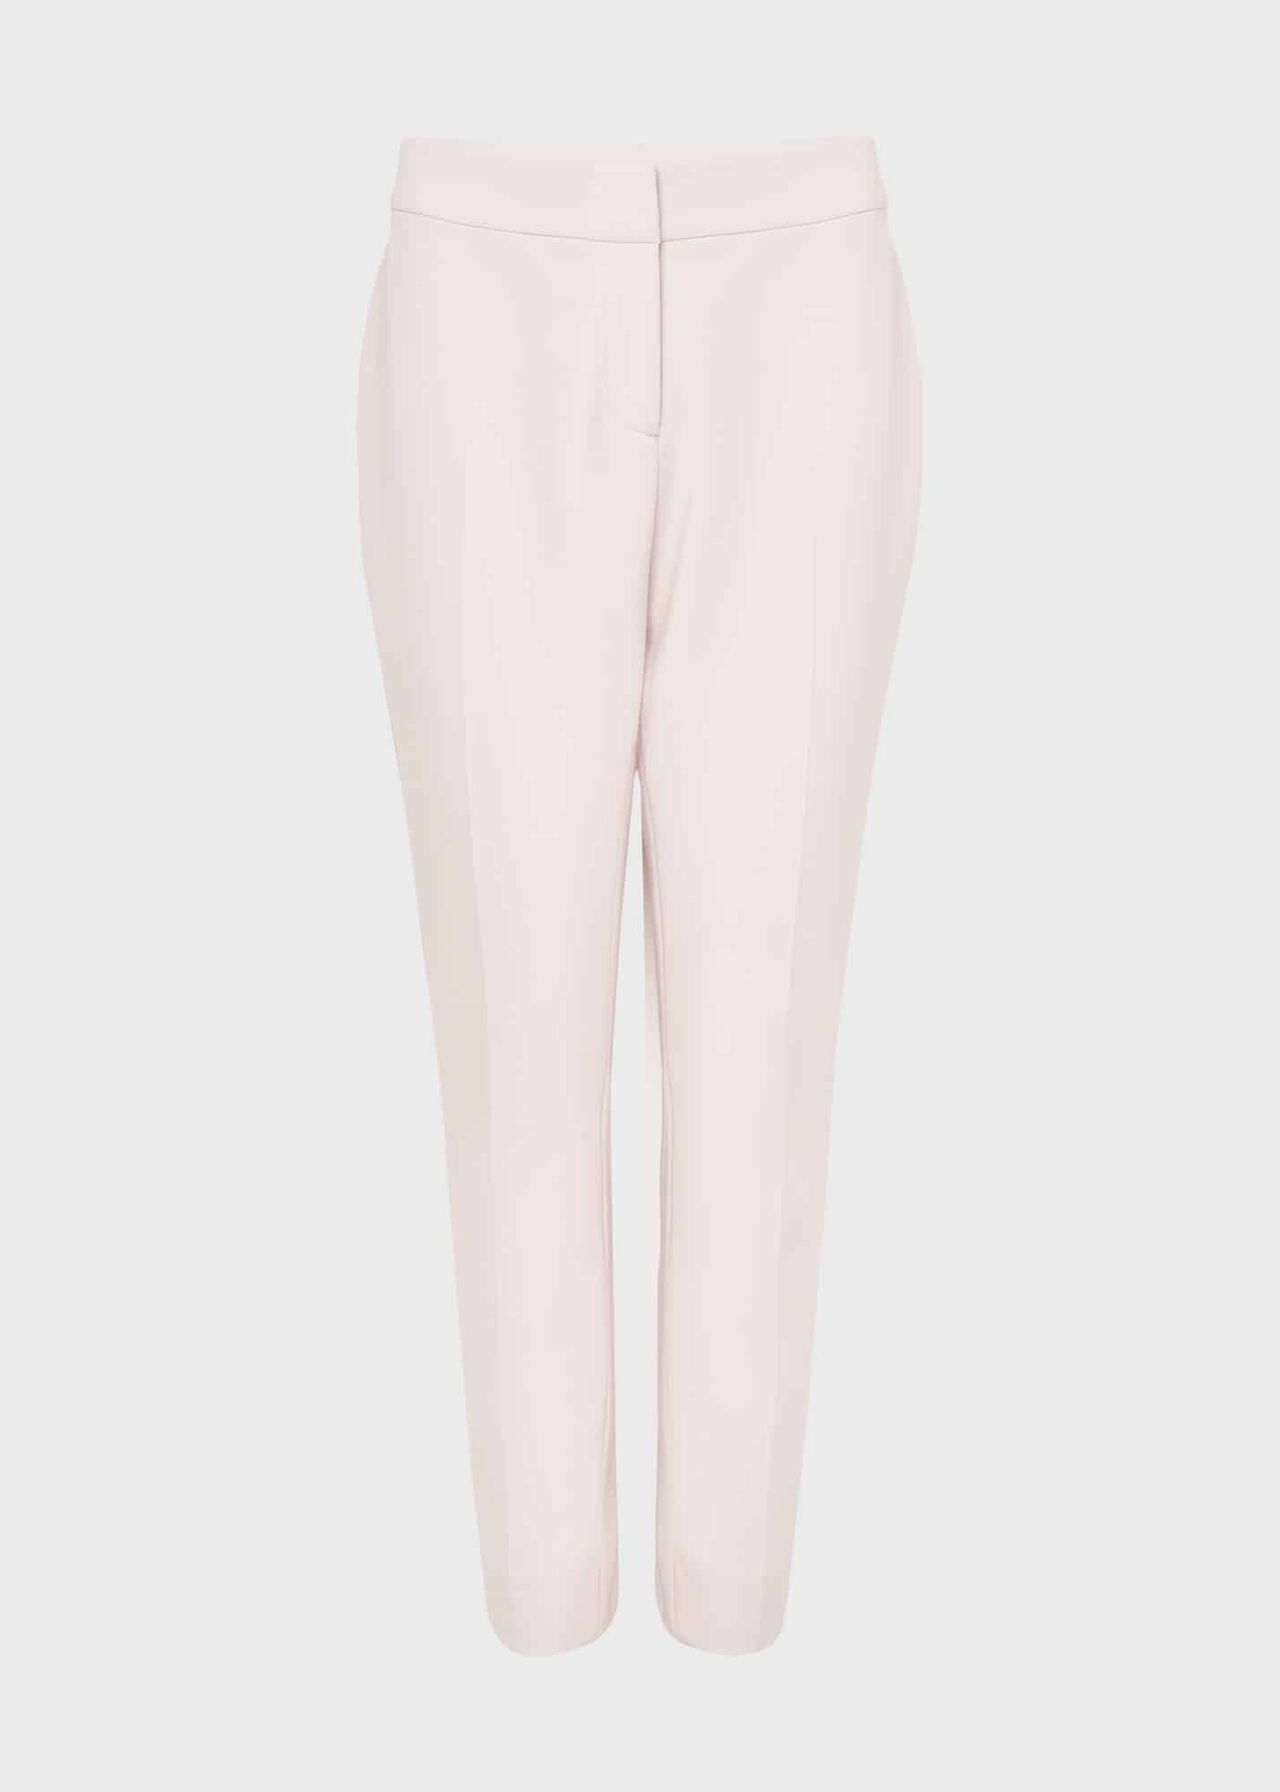 Kaia Slim Trousers, Pale Pink, hi-res